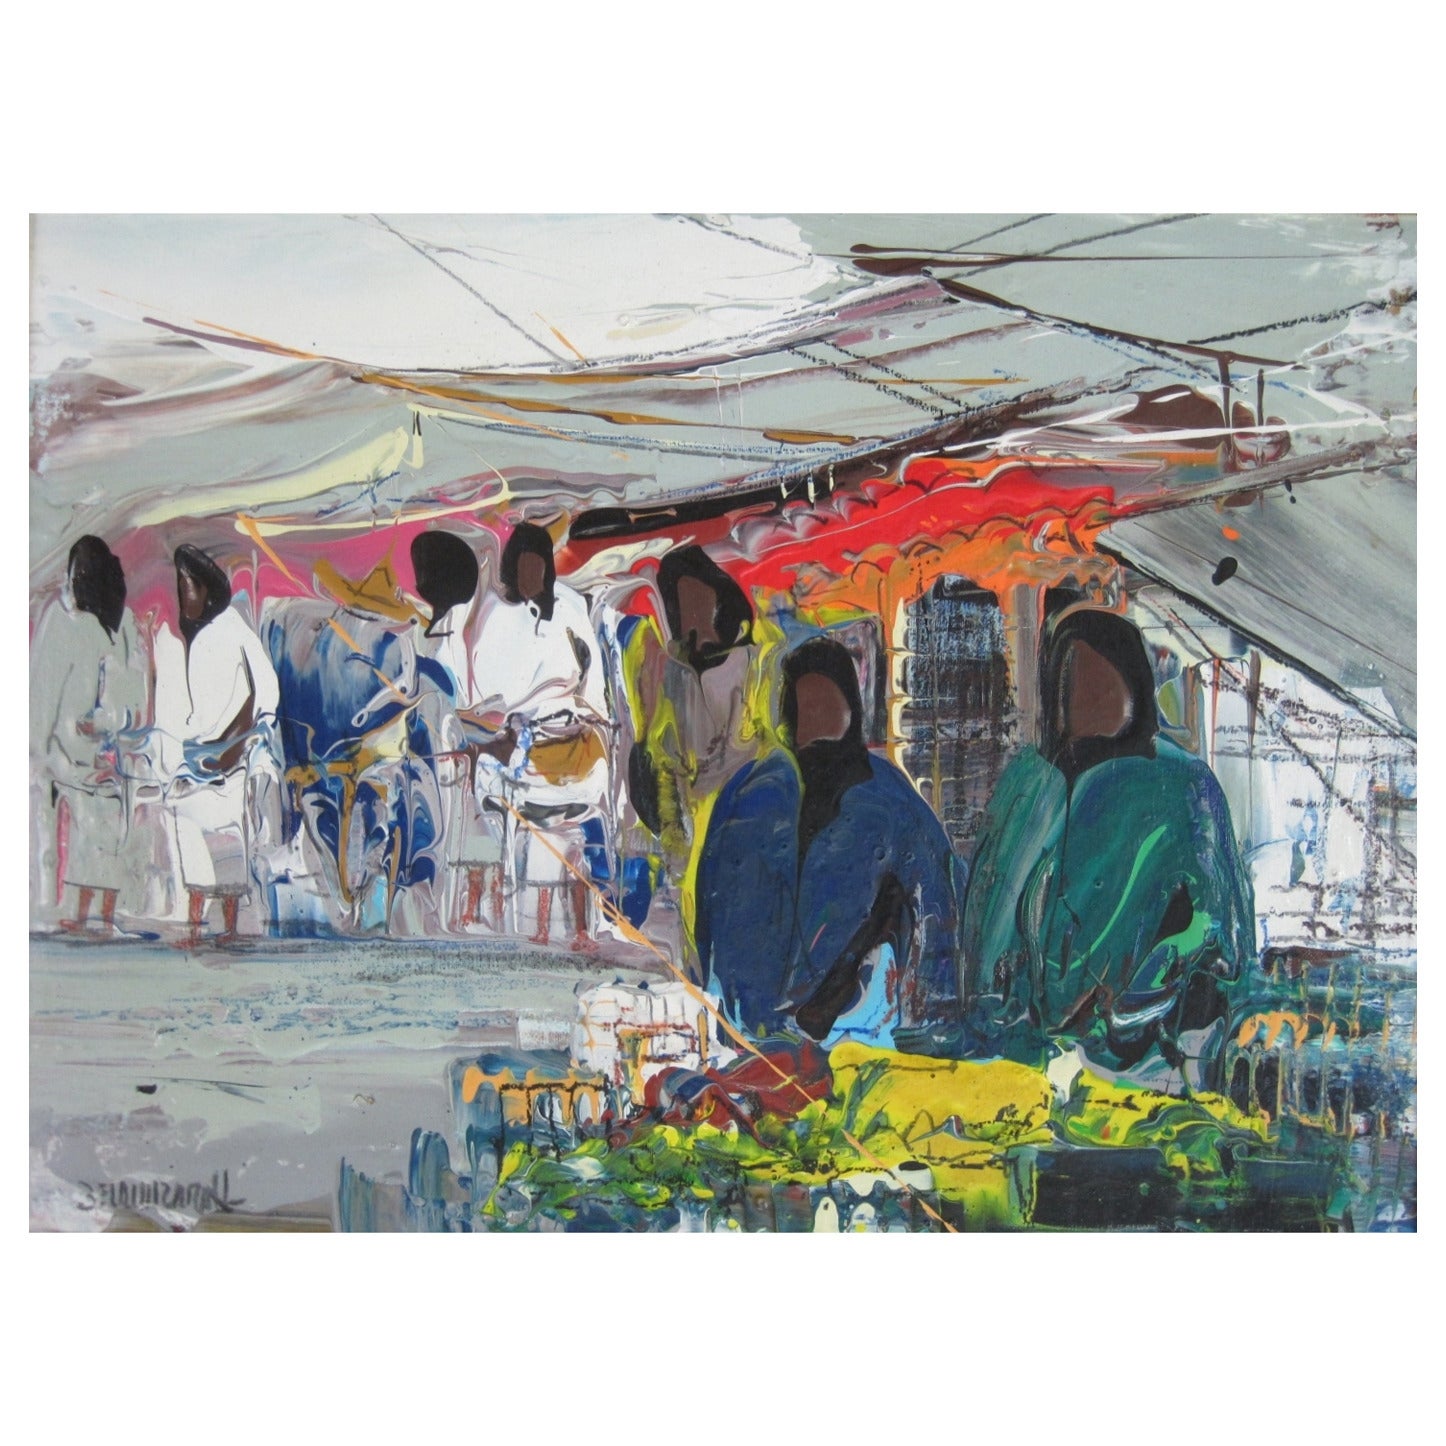 Leon Belaunzaran Painting "El Mercado" Oil on Canvas